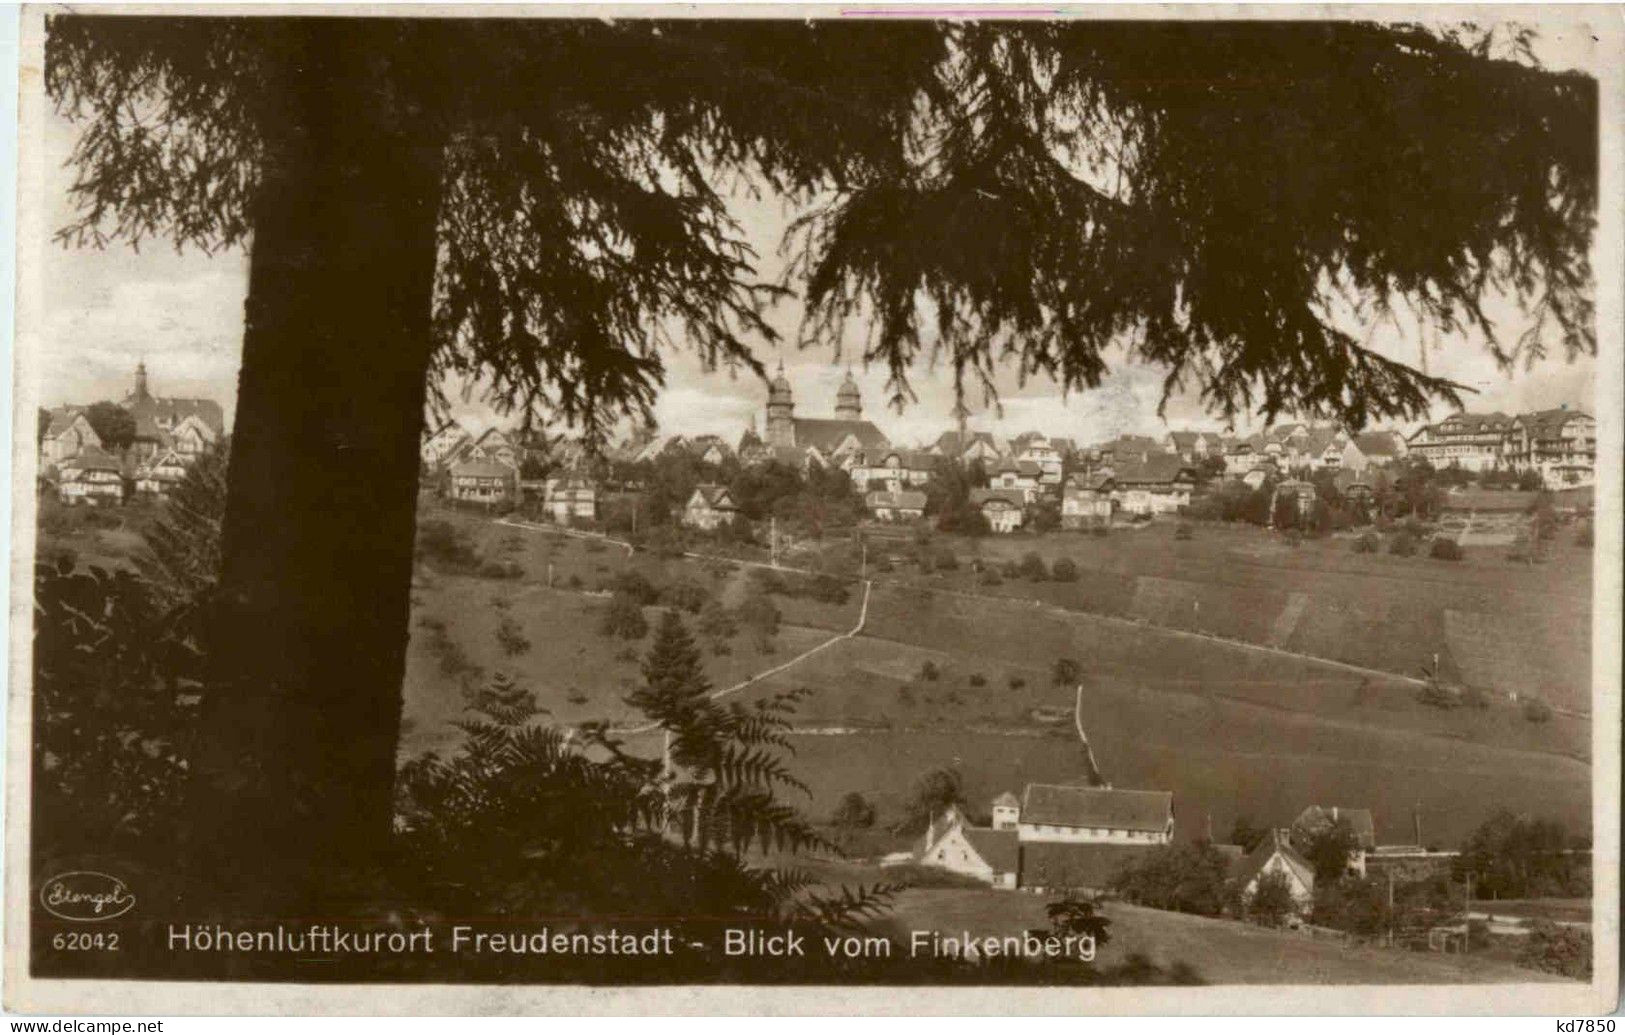 Freudenstadt - Freudenstadt